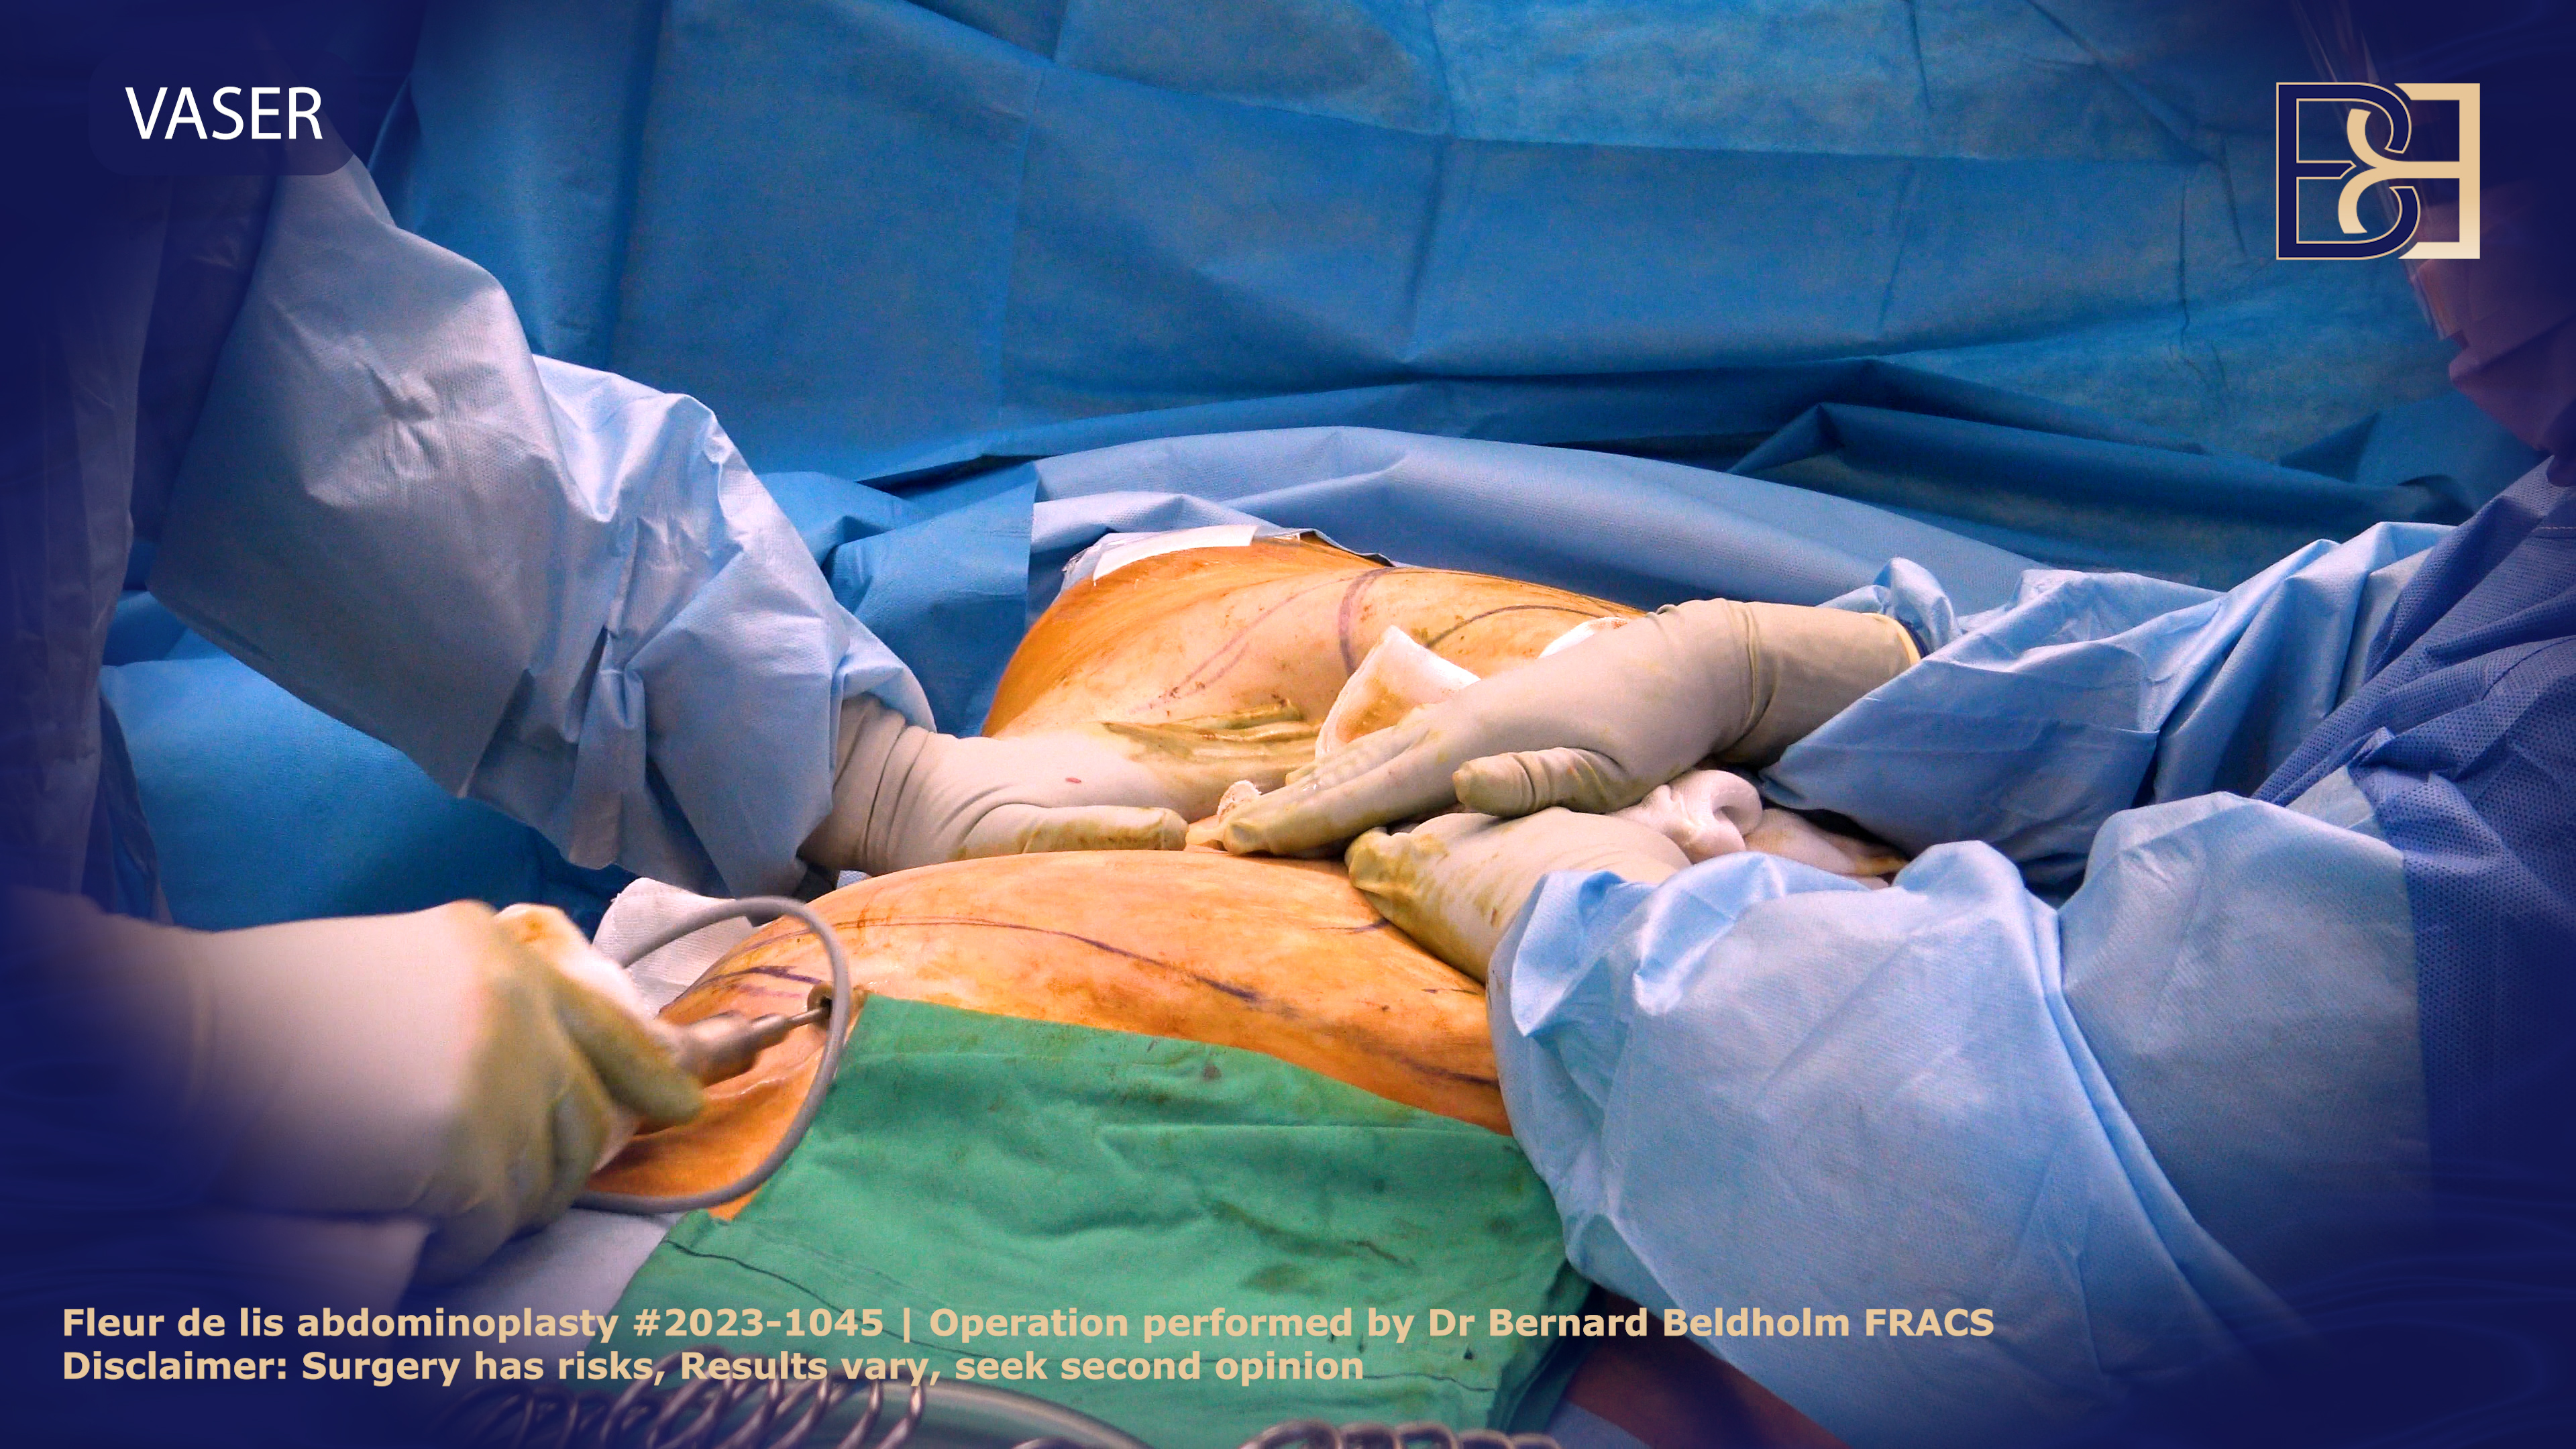 Dr Bernard Beldholm performing VASER liposuction as part of Fleur de lis abdominoplasty